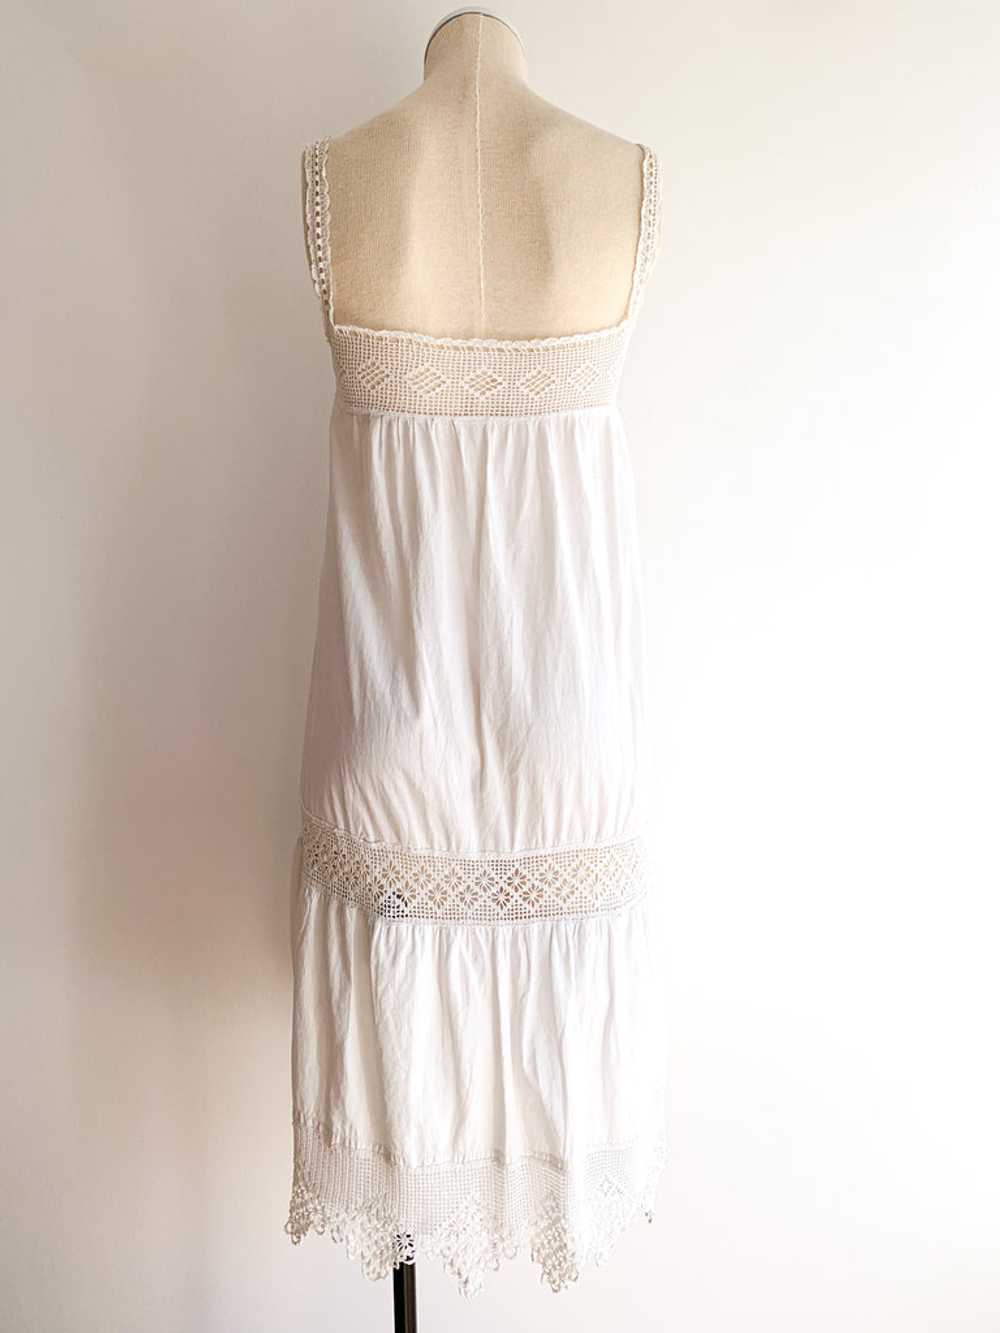 Antique Cotton & Crochet Summer Dress - image 6